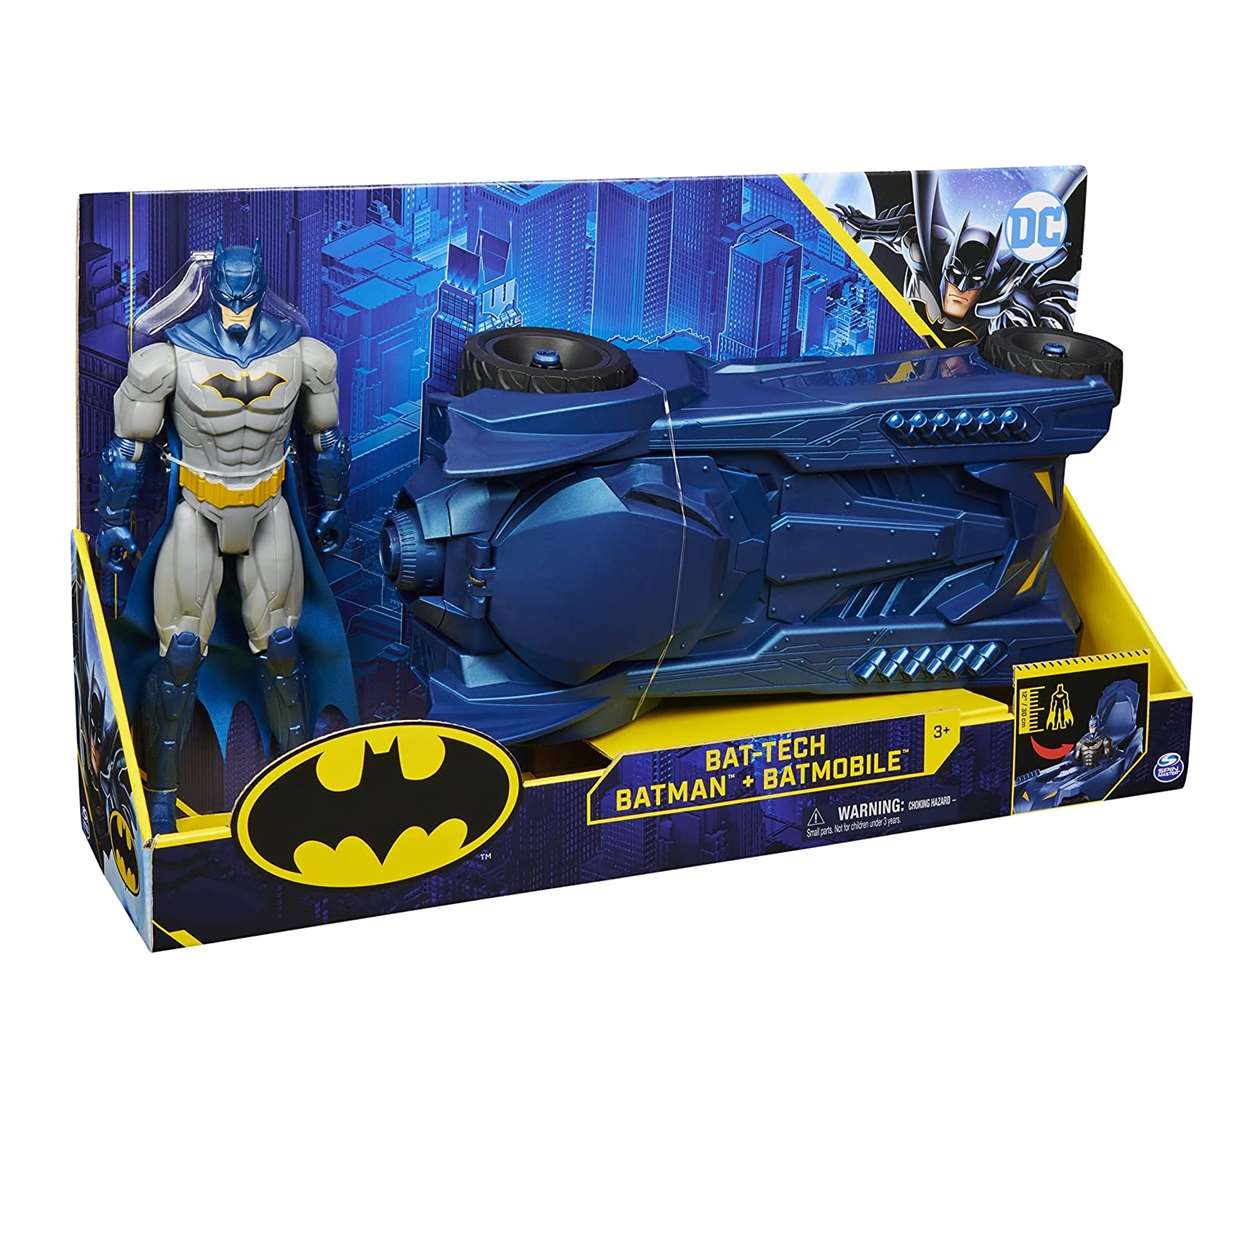 Pack Bat Tech Batman + Batmobile Figura The Caped Crusader